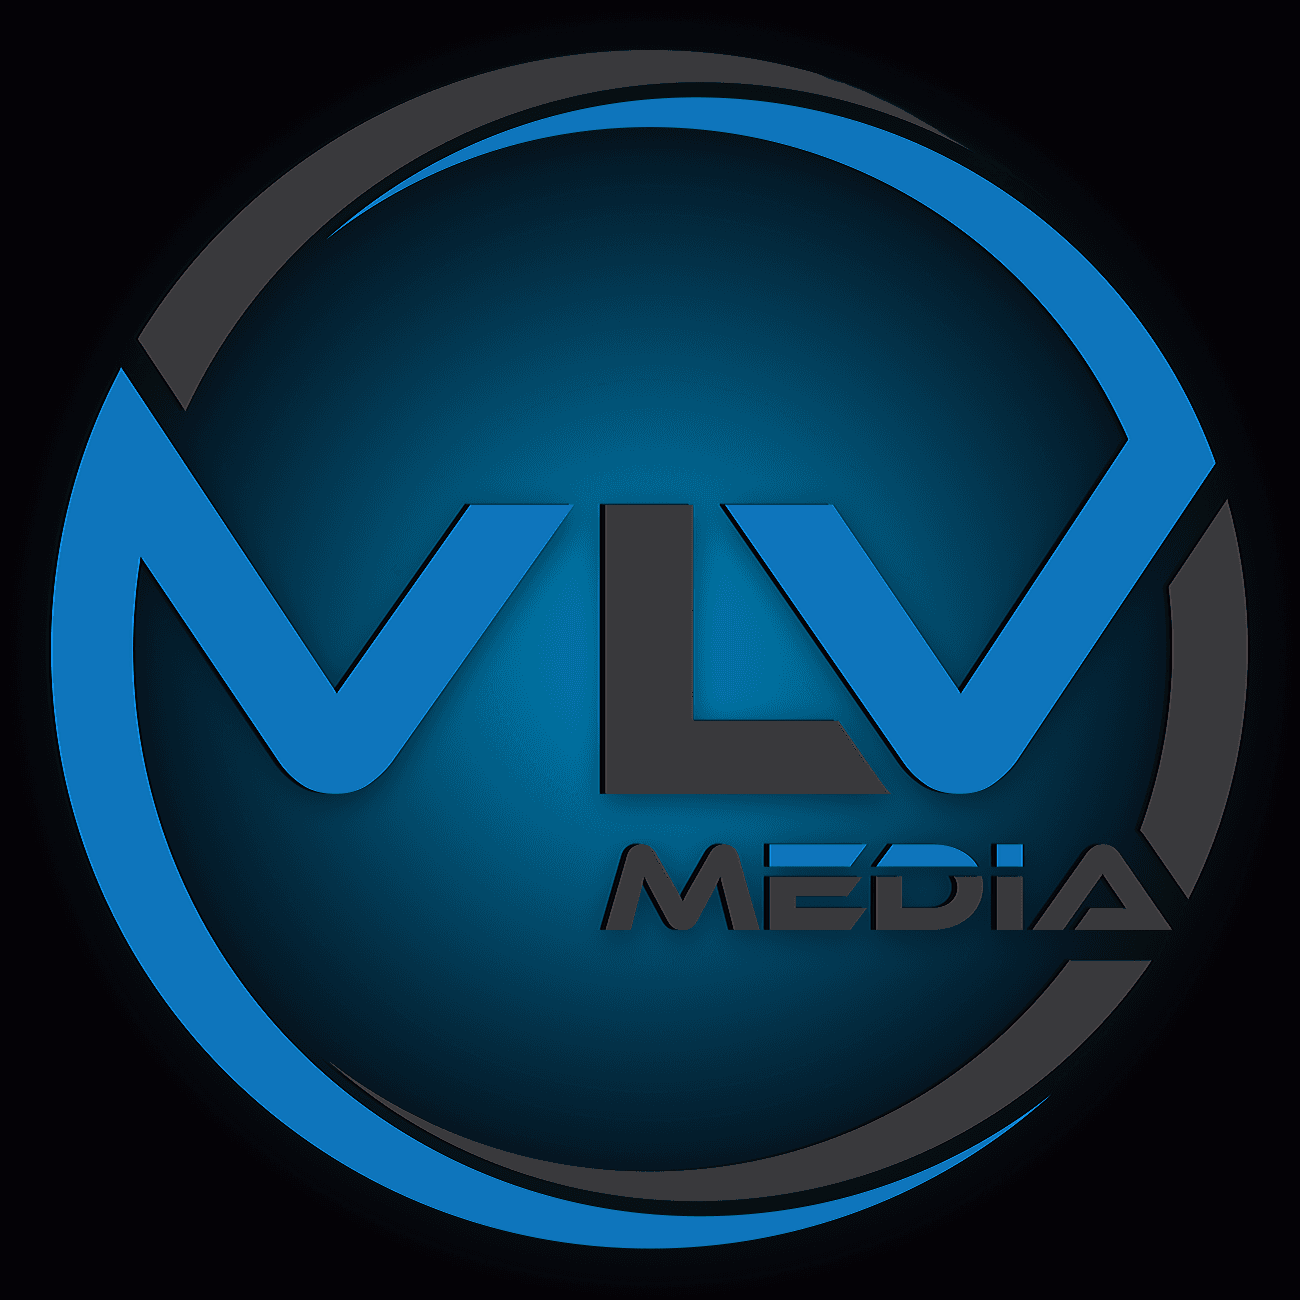 VLVmedia